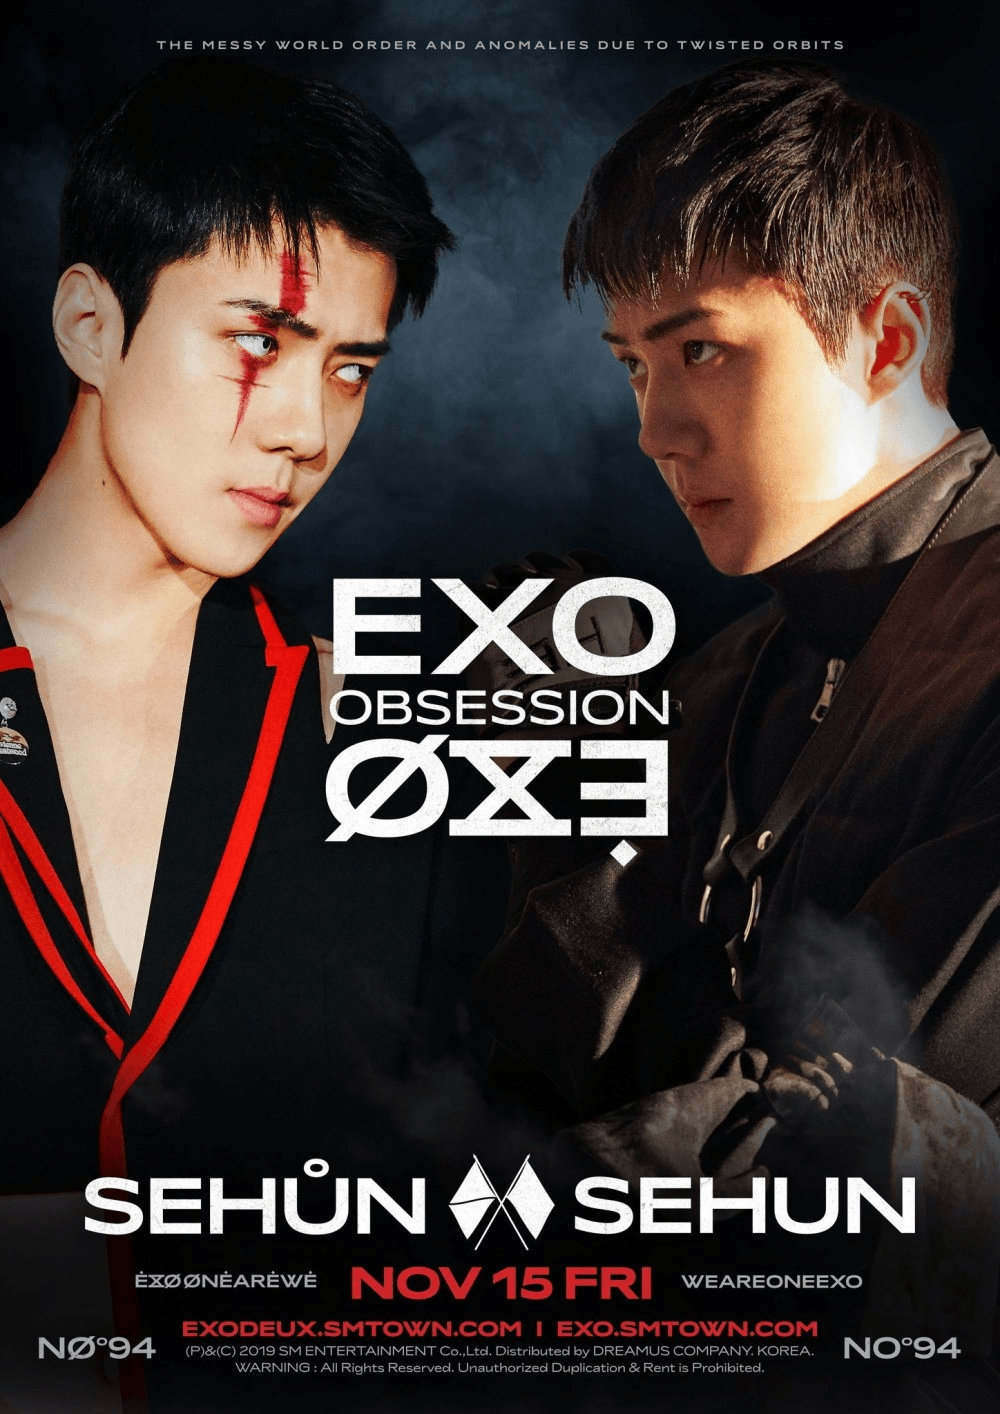 EXO's Sehun comes face to face with doppelganger